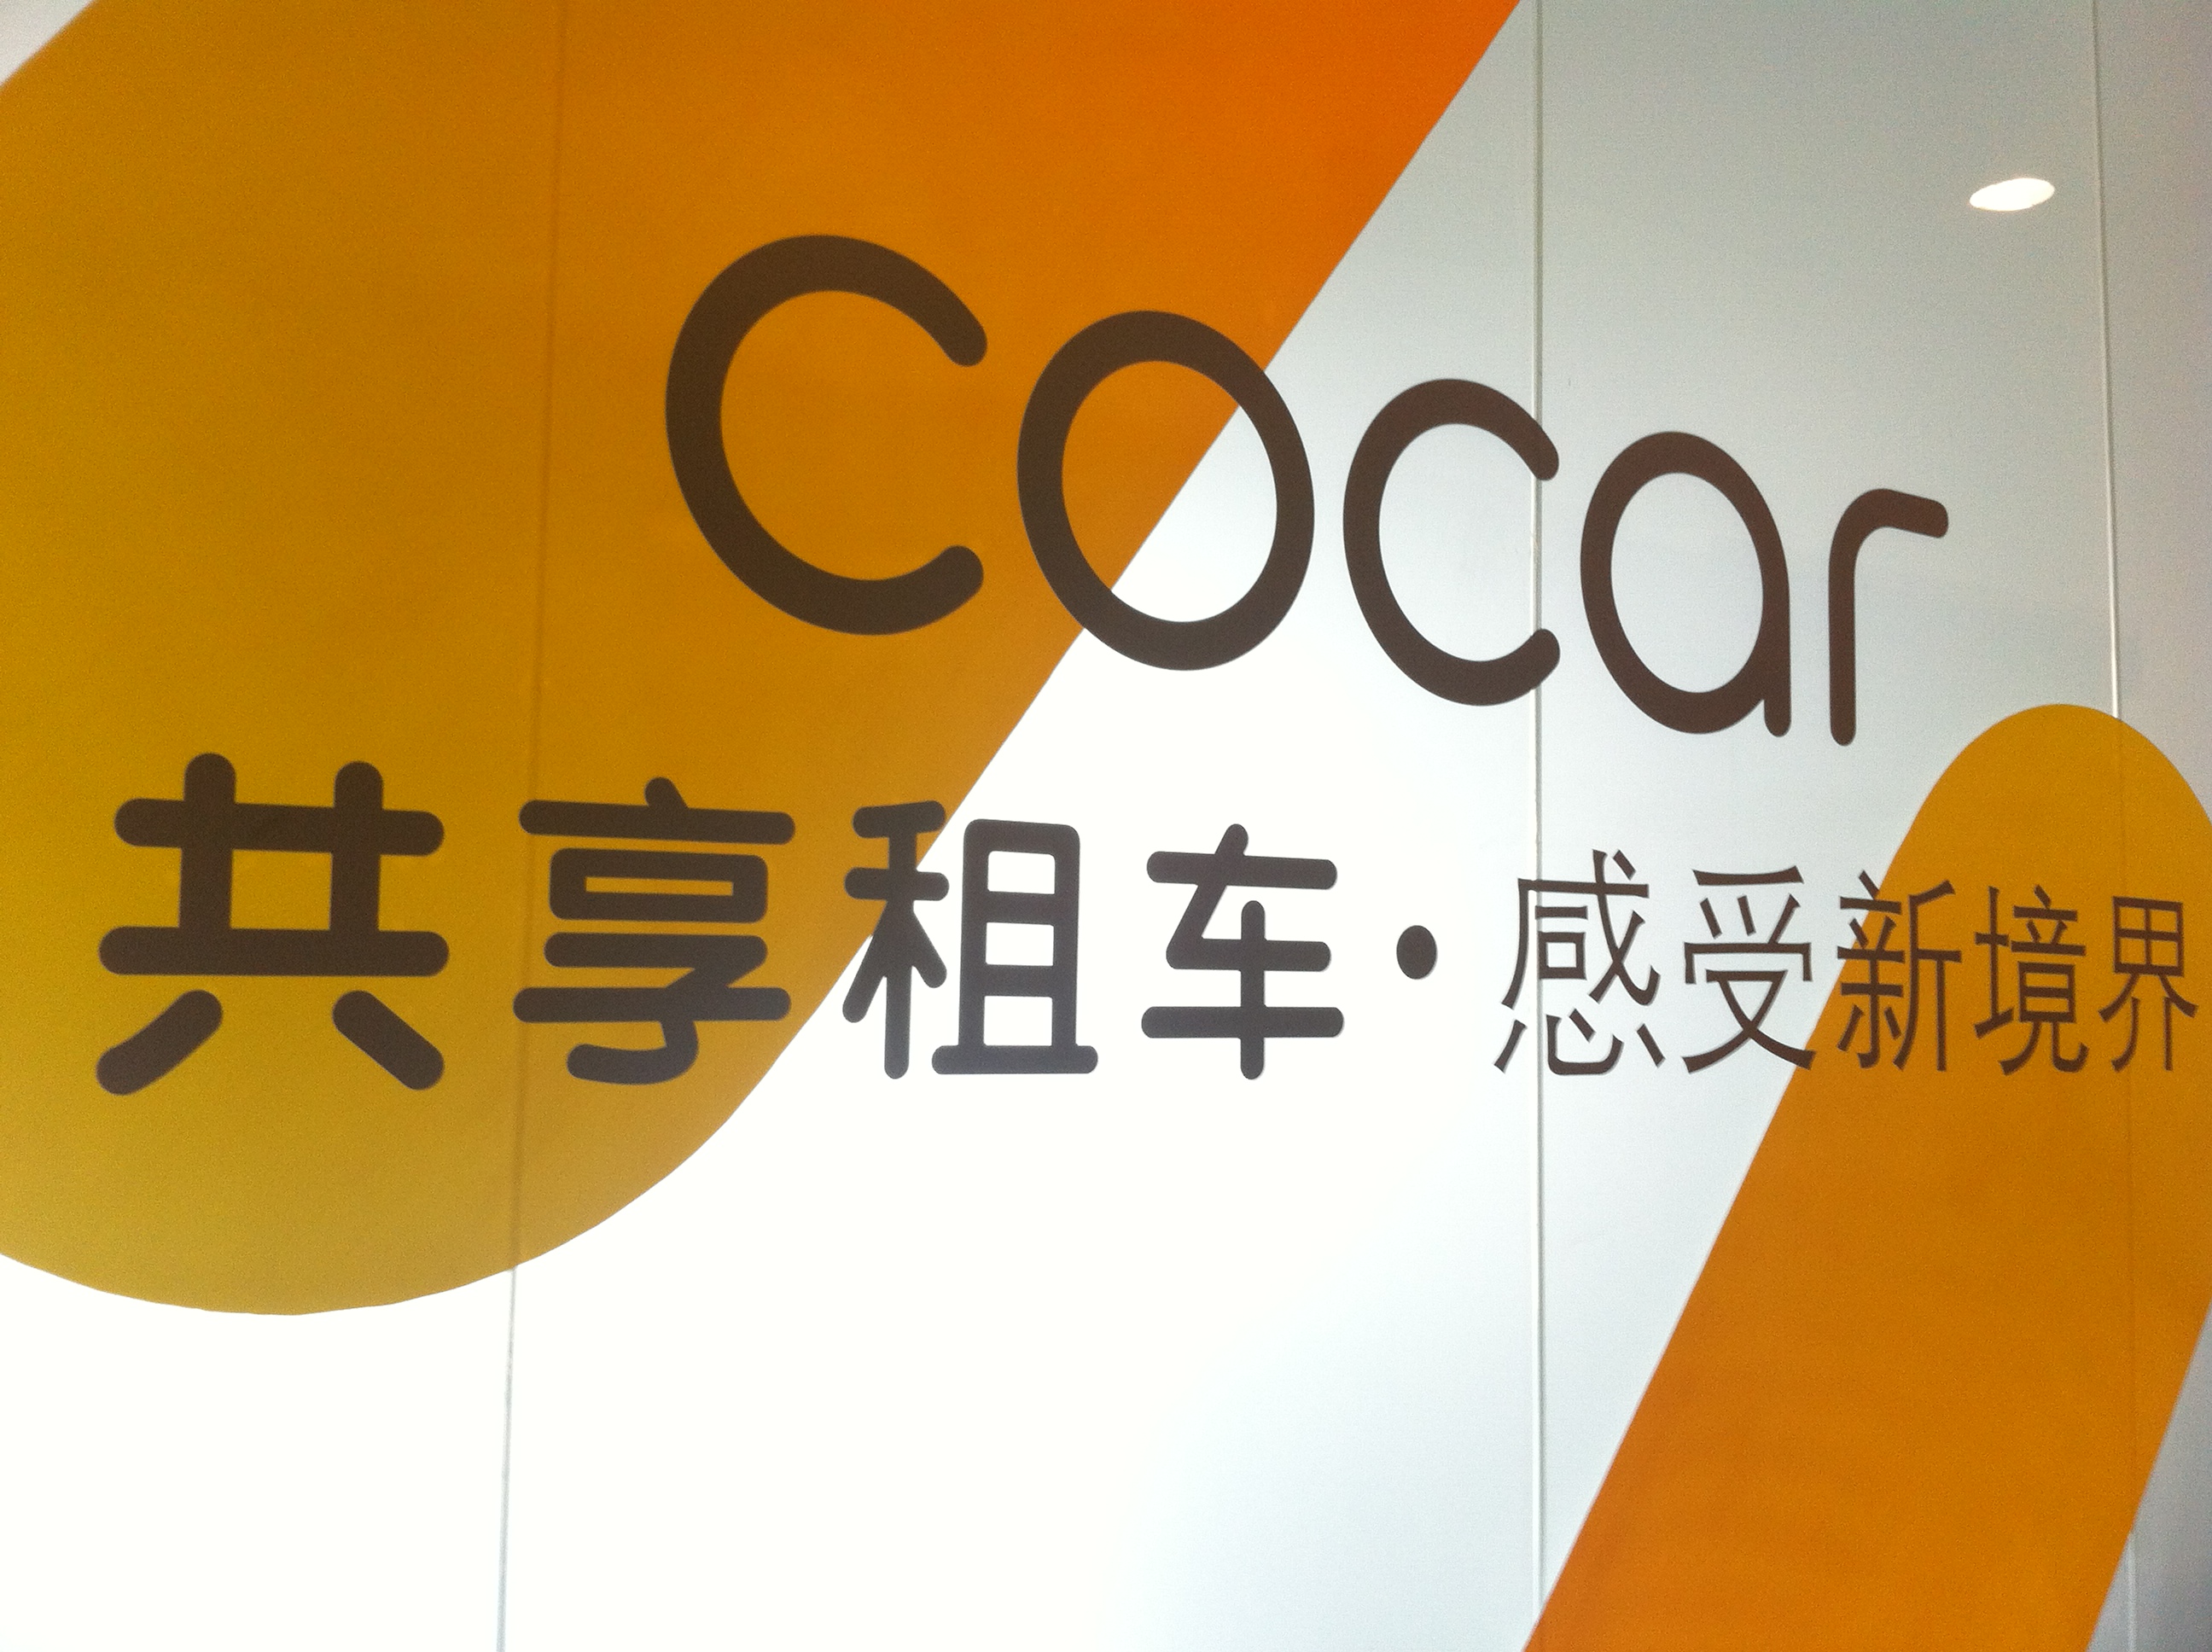 Cocar共享租车创始人吴苇:这么难，为什么还要创业？